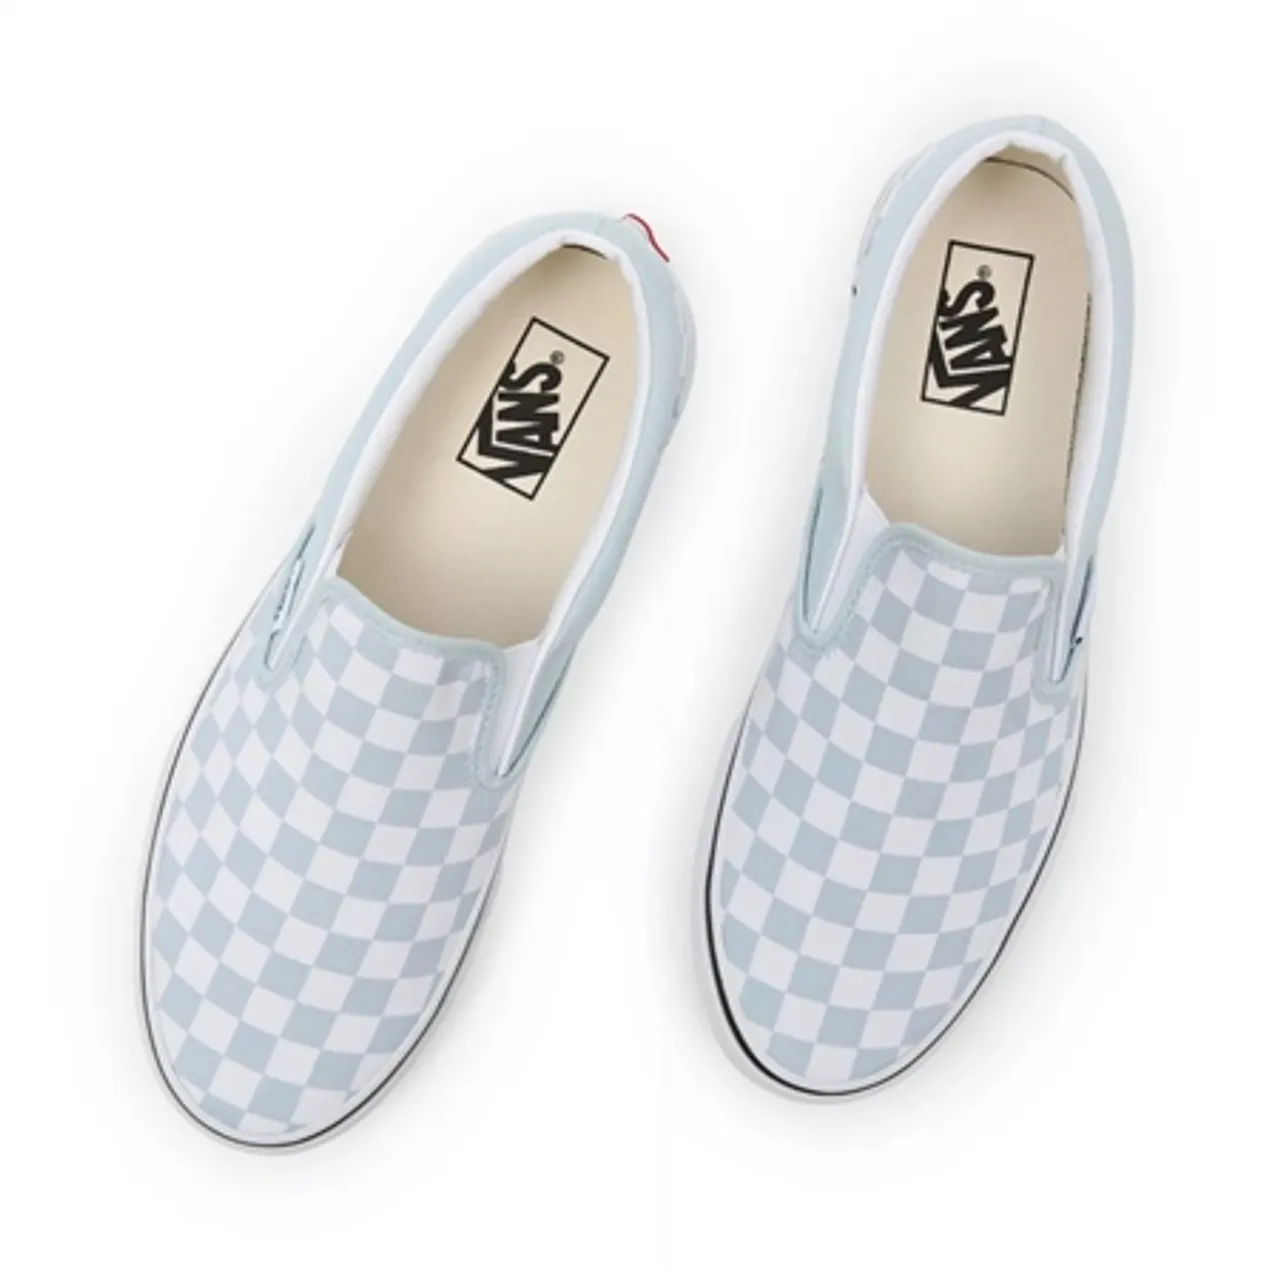 Vans Classic Slip On Shoes - Checherboard & Canel Blue - UK 4 (EU 36.5)